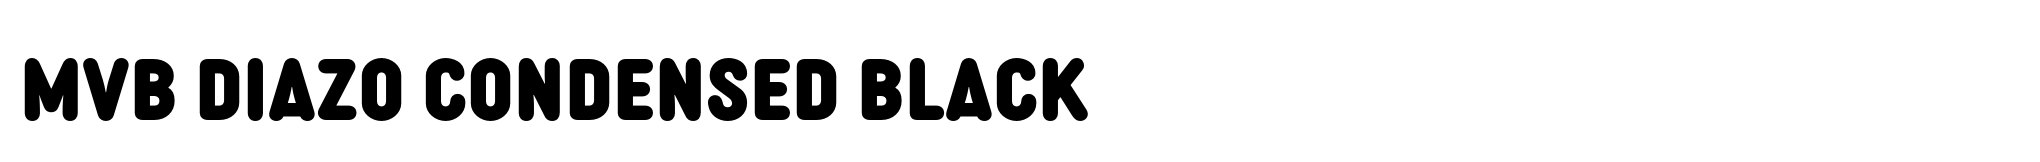 MVB Diazo Condensed Black image